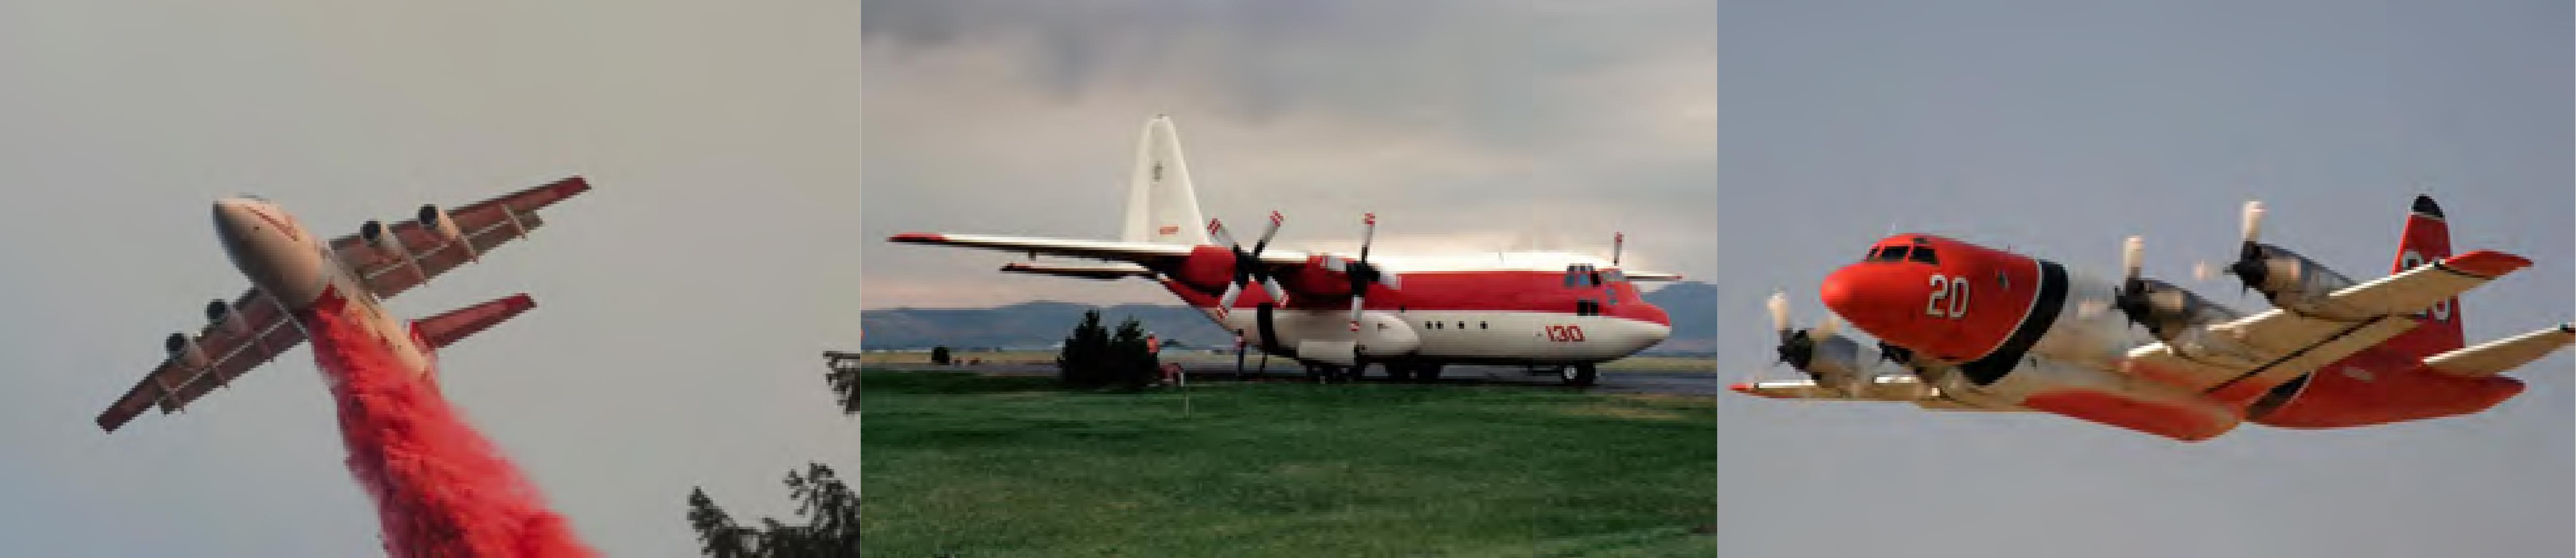   Example Firefighting Aircraft at Rocky Mountain Metropolitan Airport